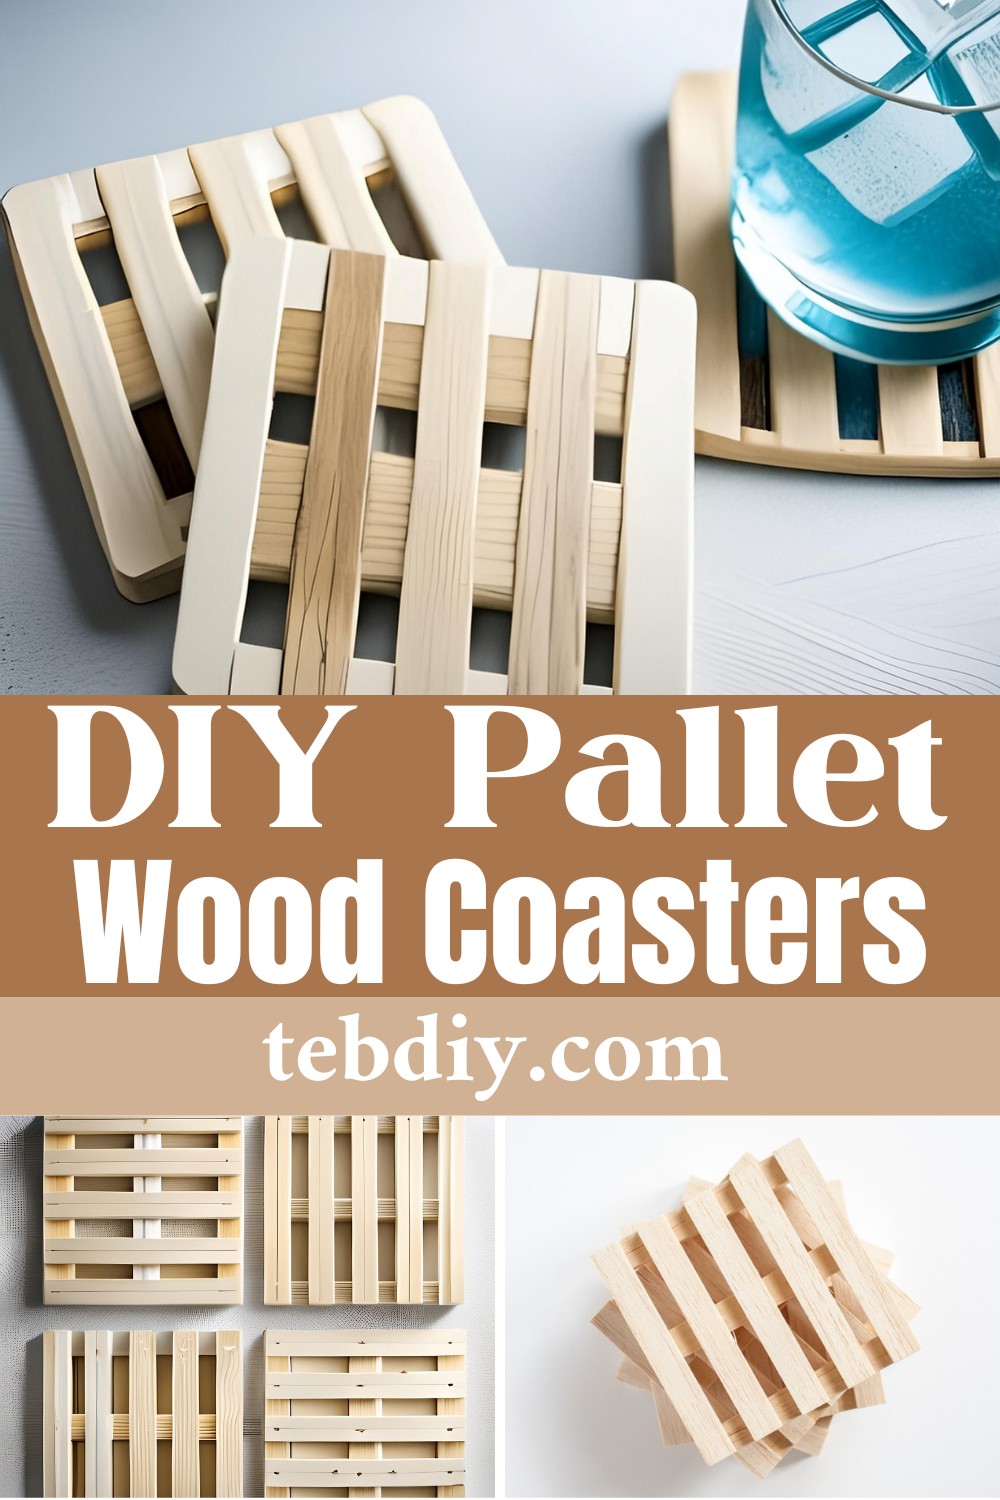 DIY Pallet Wood Coasters To Avoid Water Spills